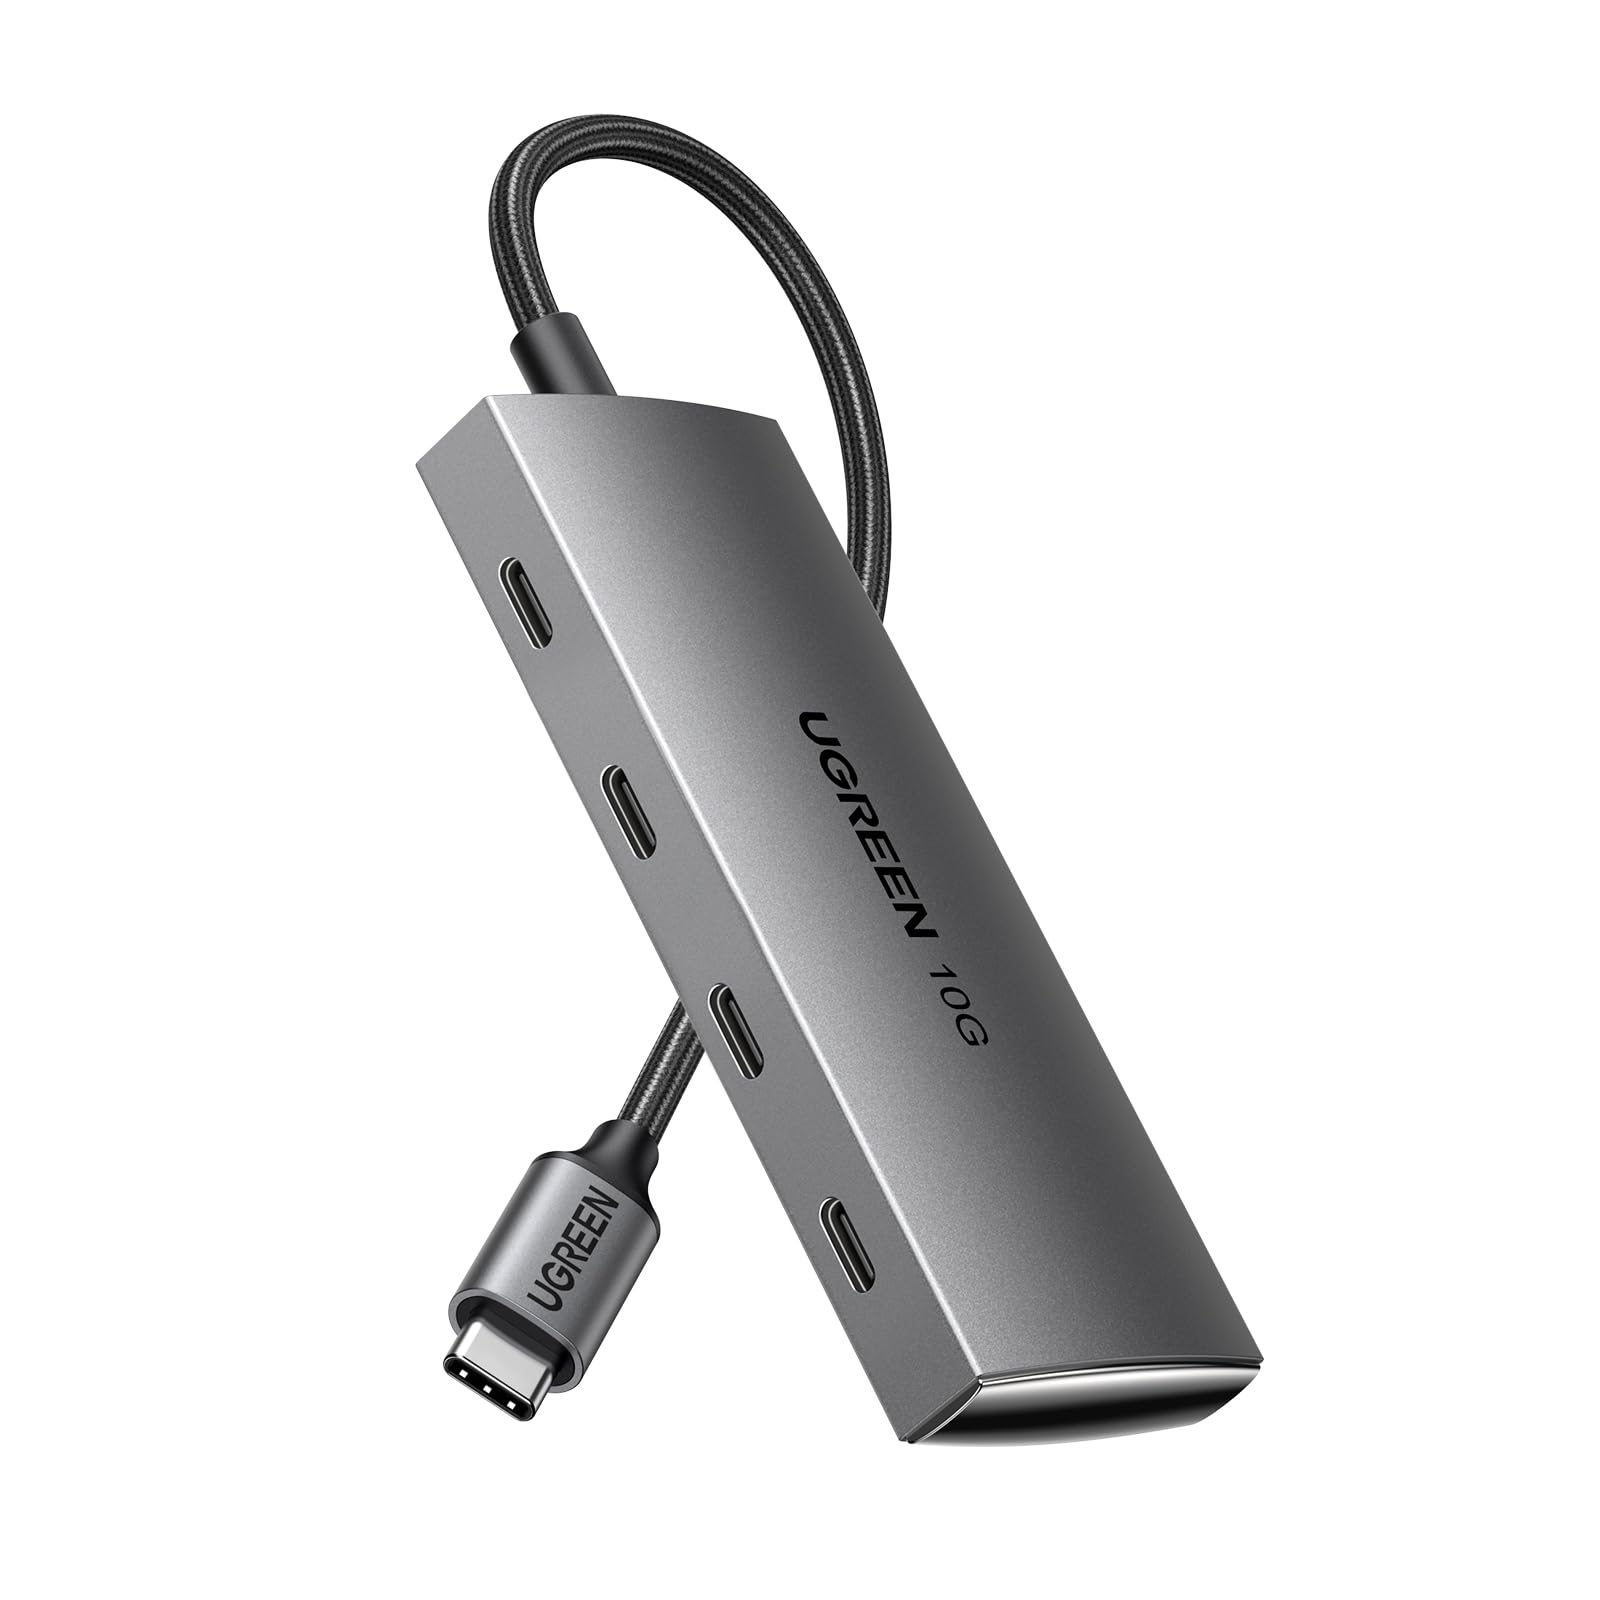 UGREEN USB C Hub 10Gbps, 4 Ports $21.99 & More + Free Shipping w/ Prime